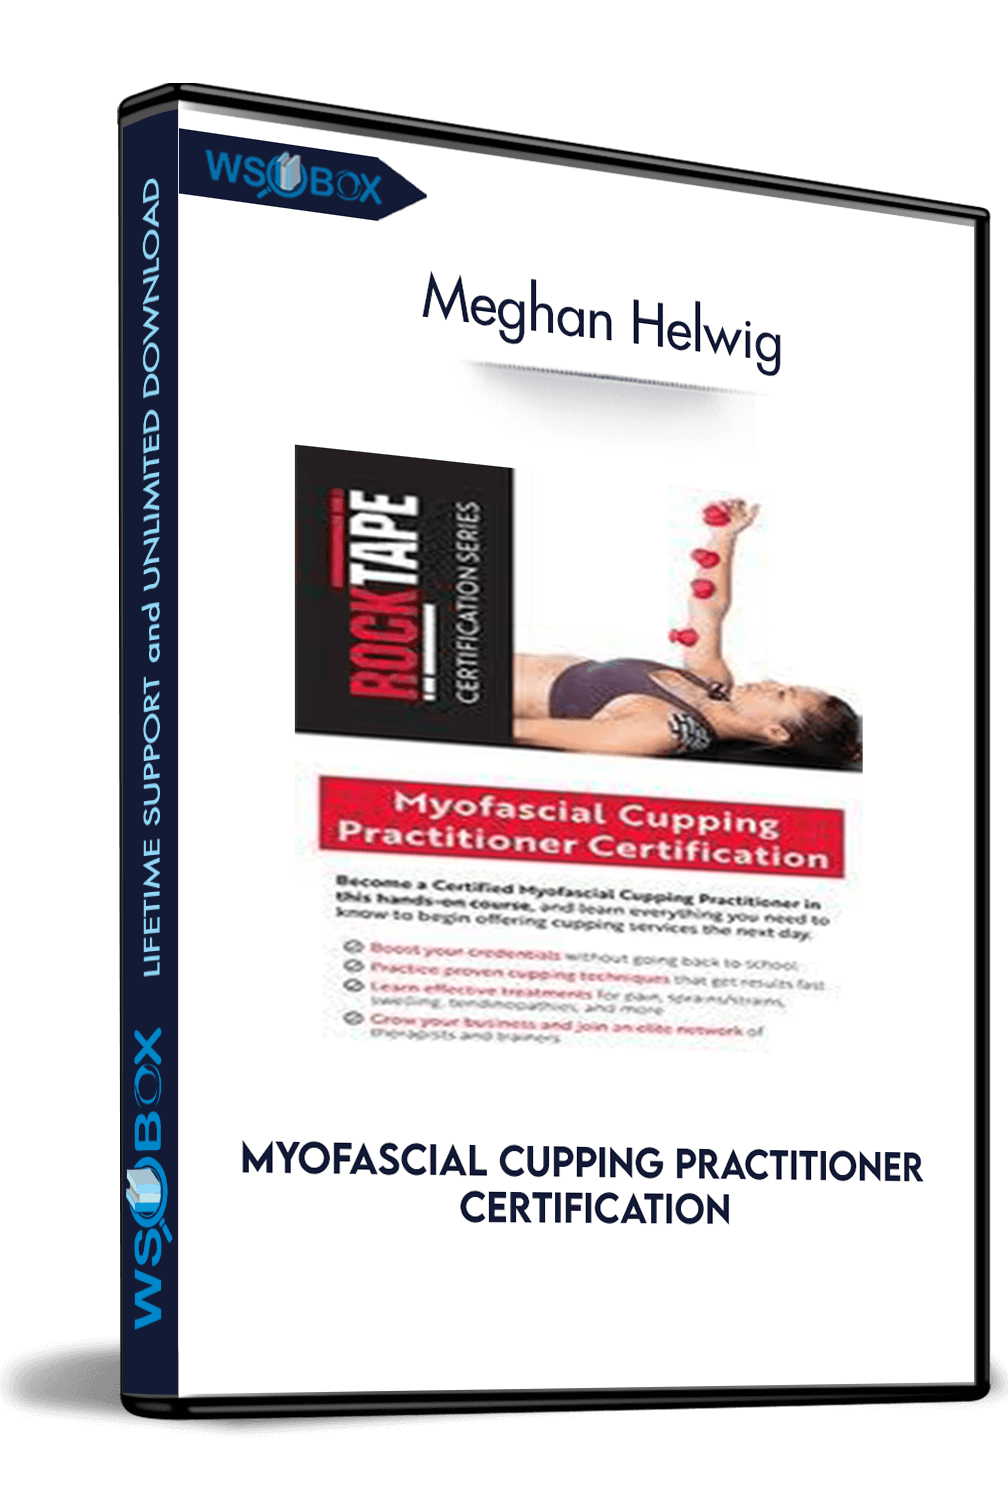 Myofascial Cupping Practitioner Certification – Meghan Helwig